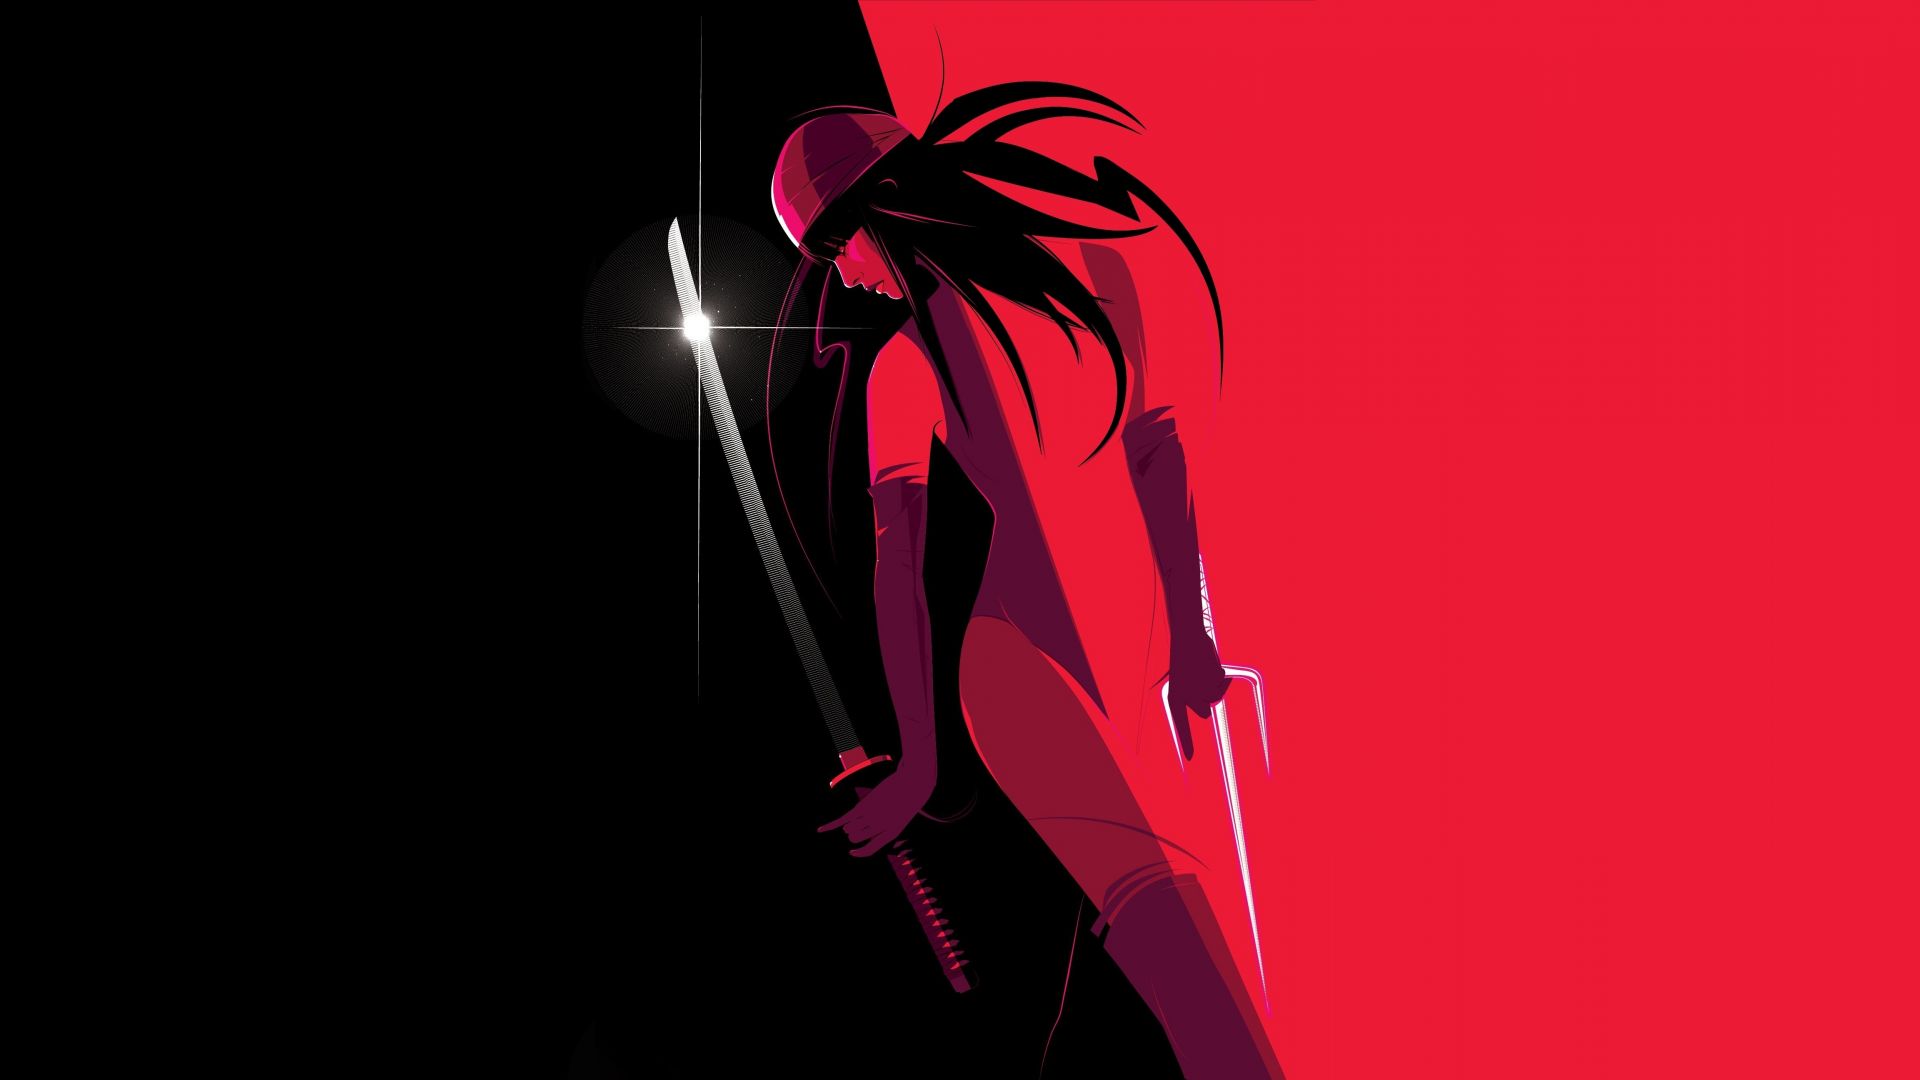 Elektra, marvel comics, minimal, art wallpaper, HD image, picture, background, 984acd